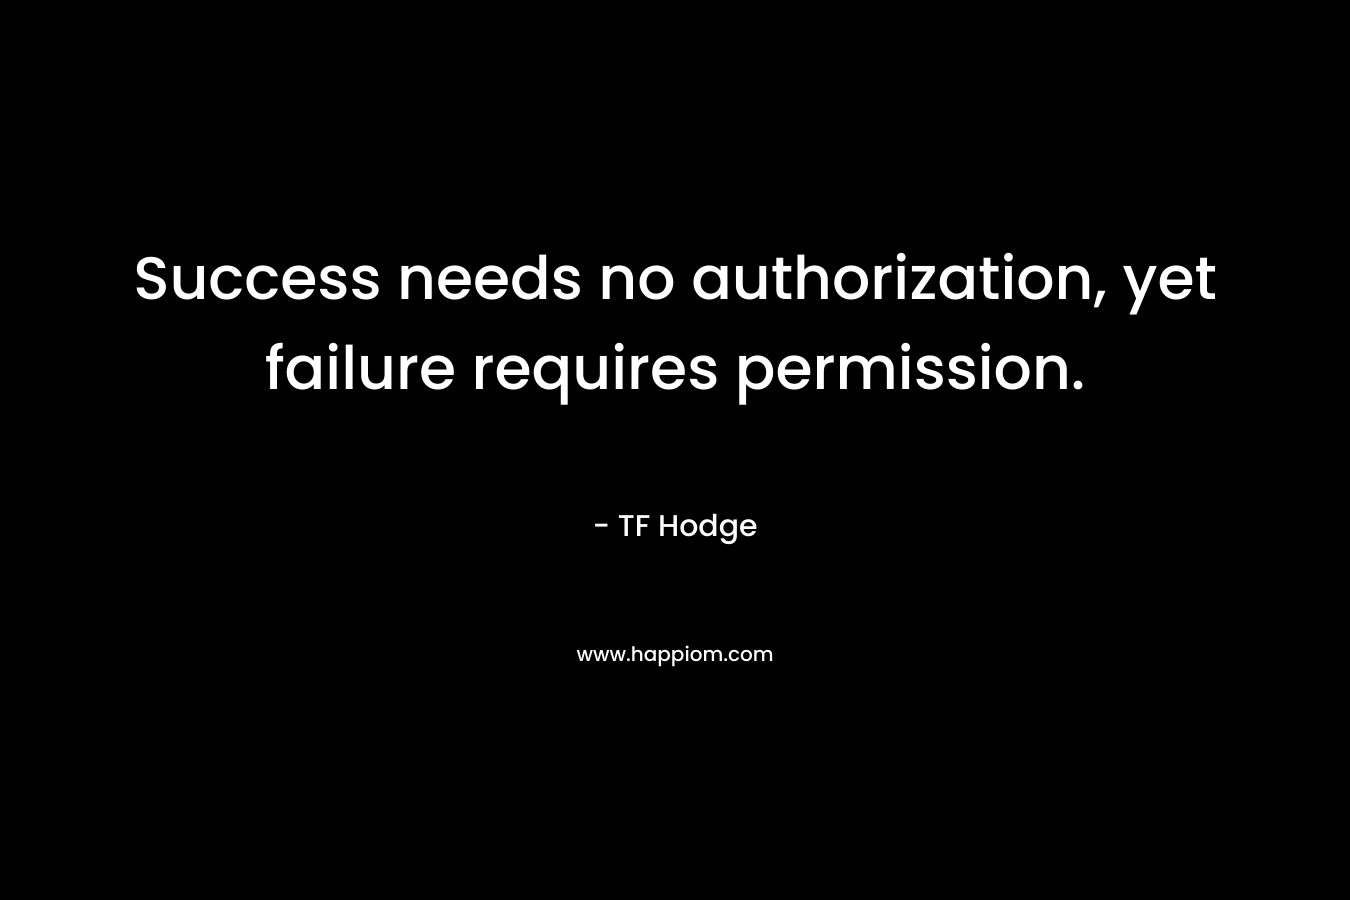 Success needs no authorization, yet failure requires permission.